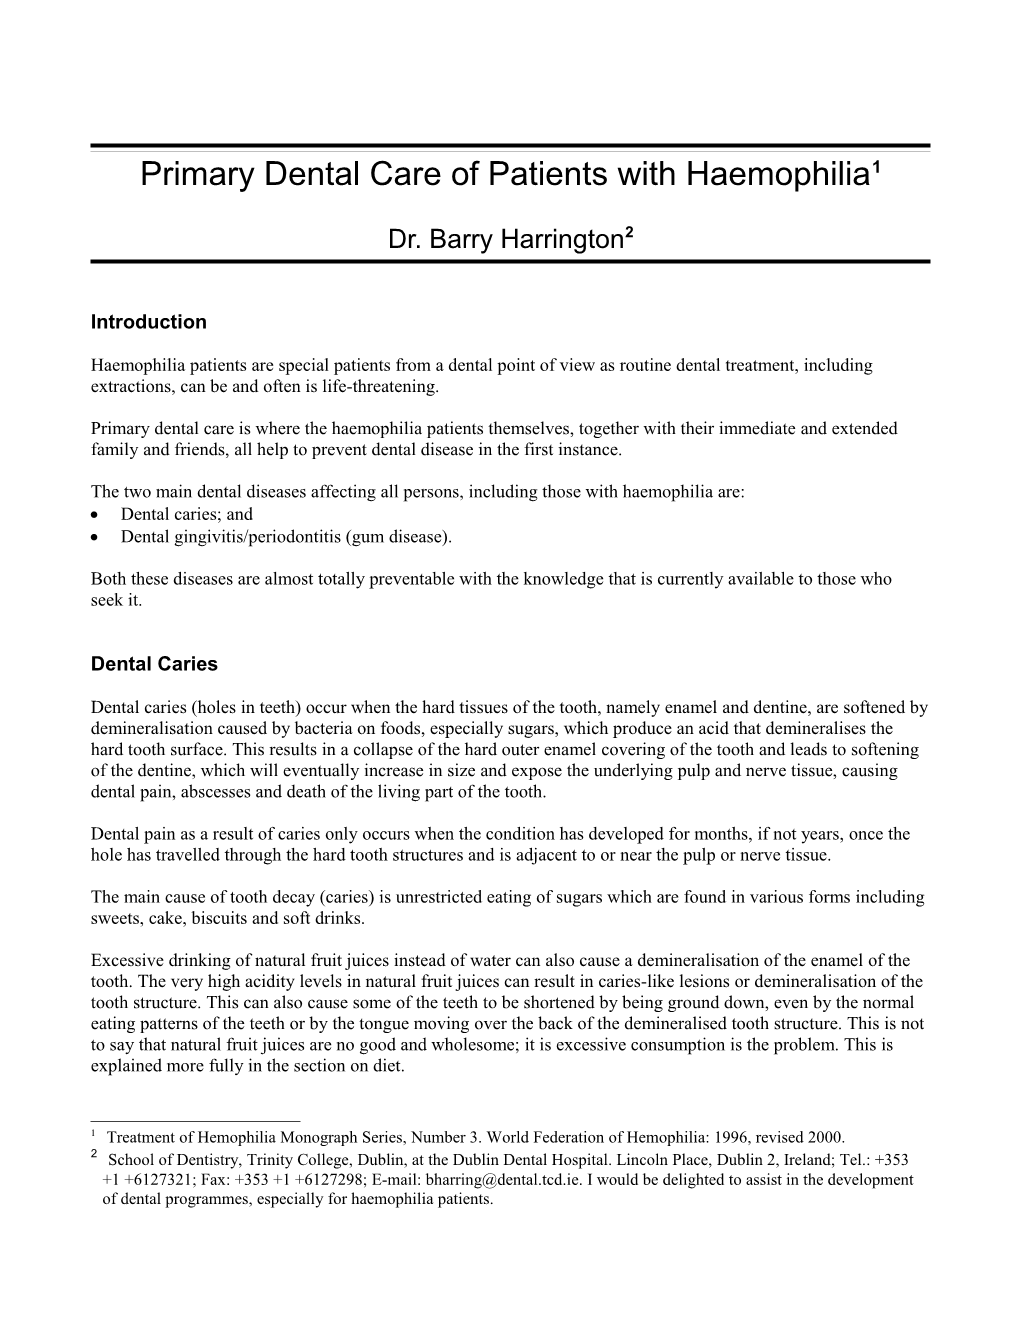 Primary Dental Care of Haemophilia Patients